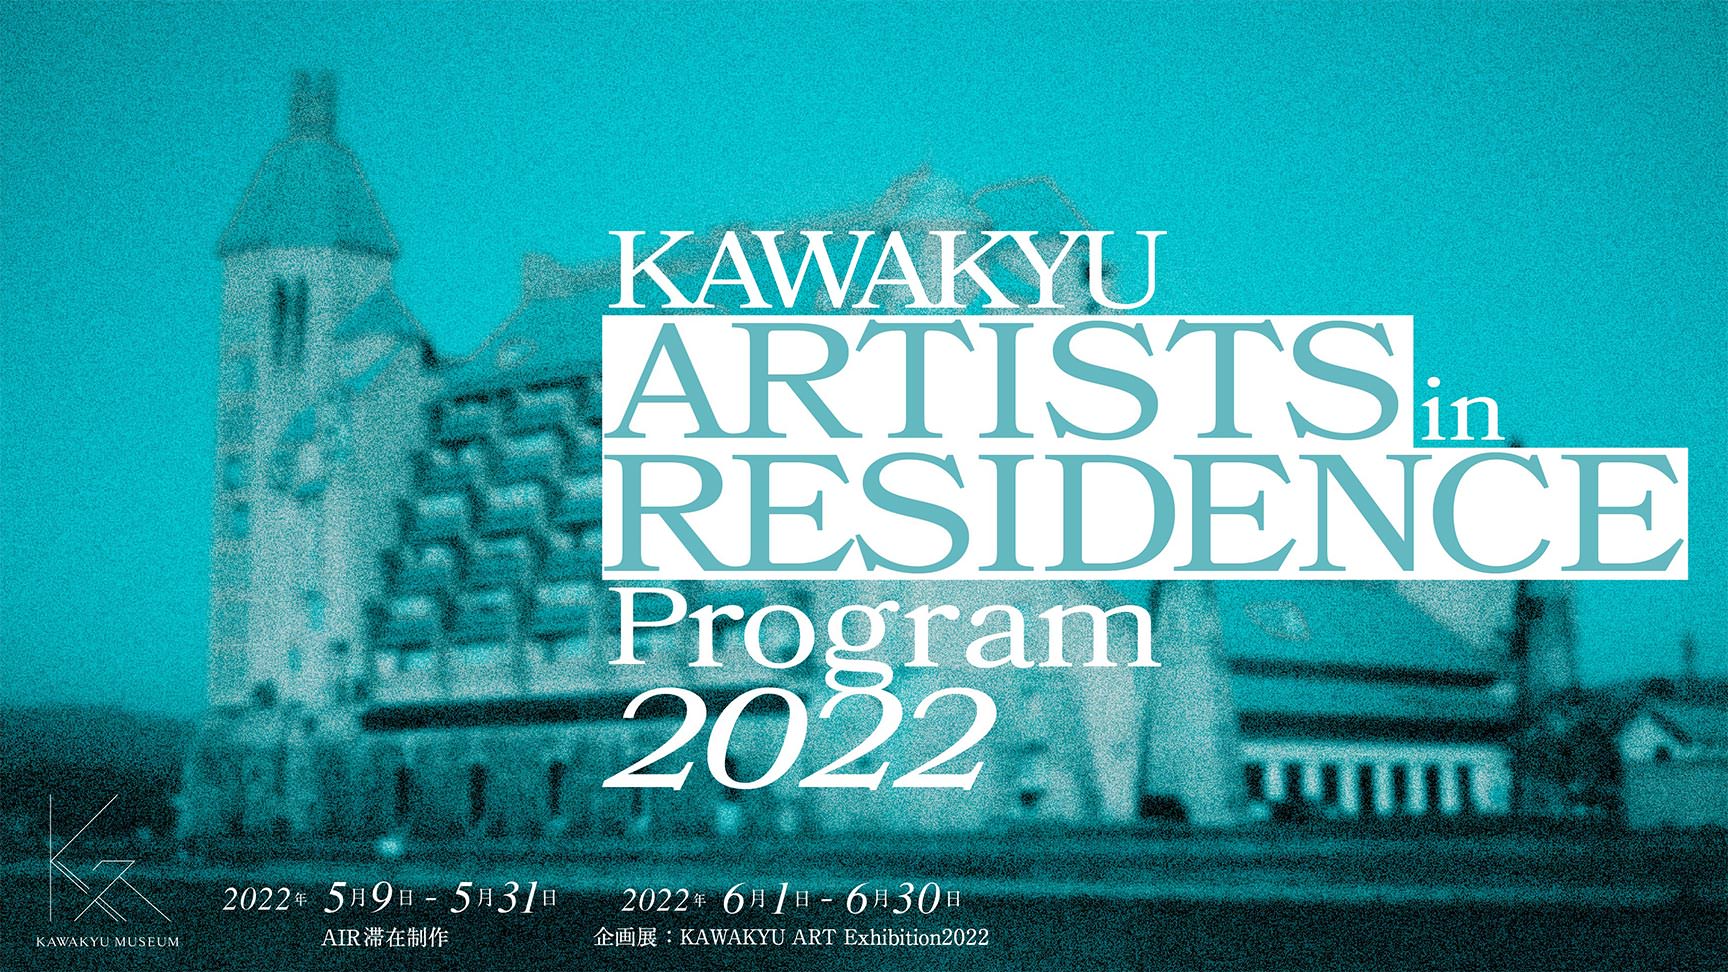 KAWAKYU ARTISTS in RESIDENCE Program 2022